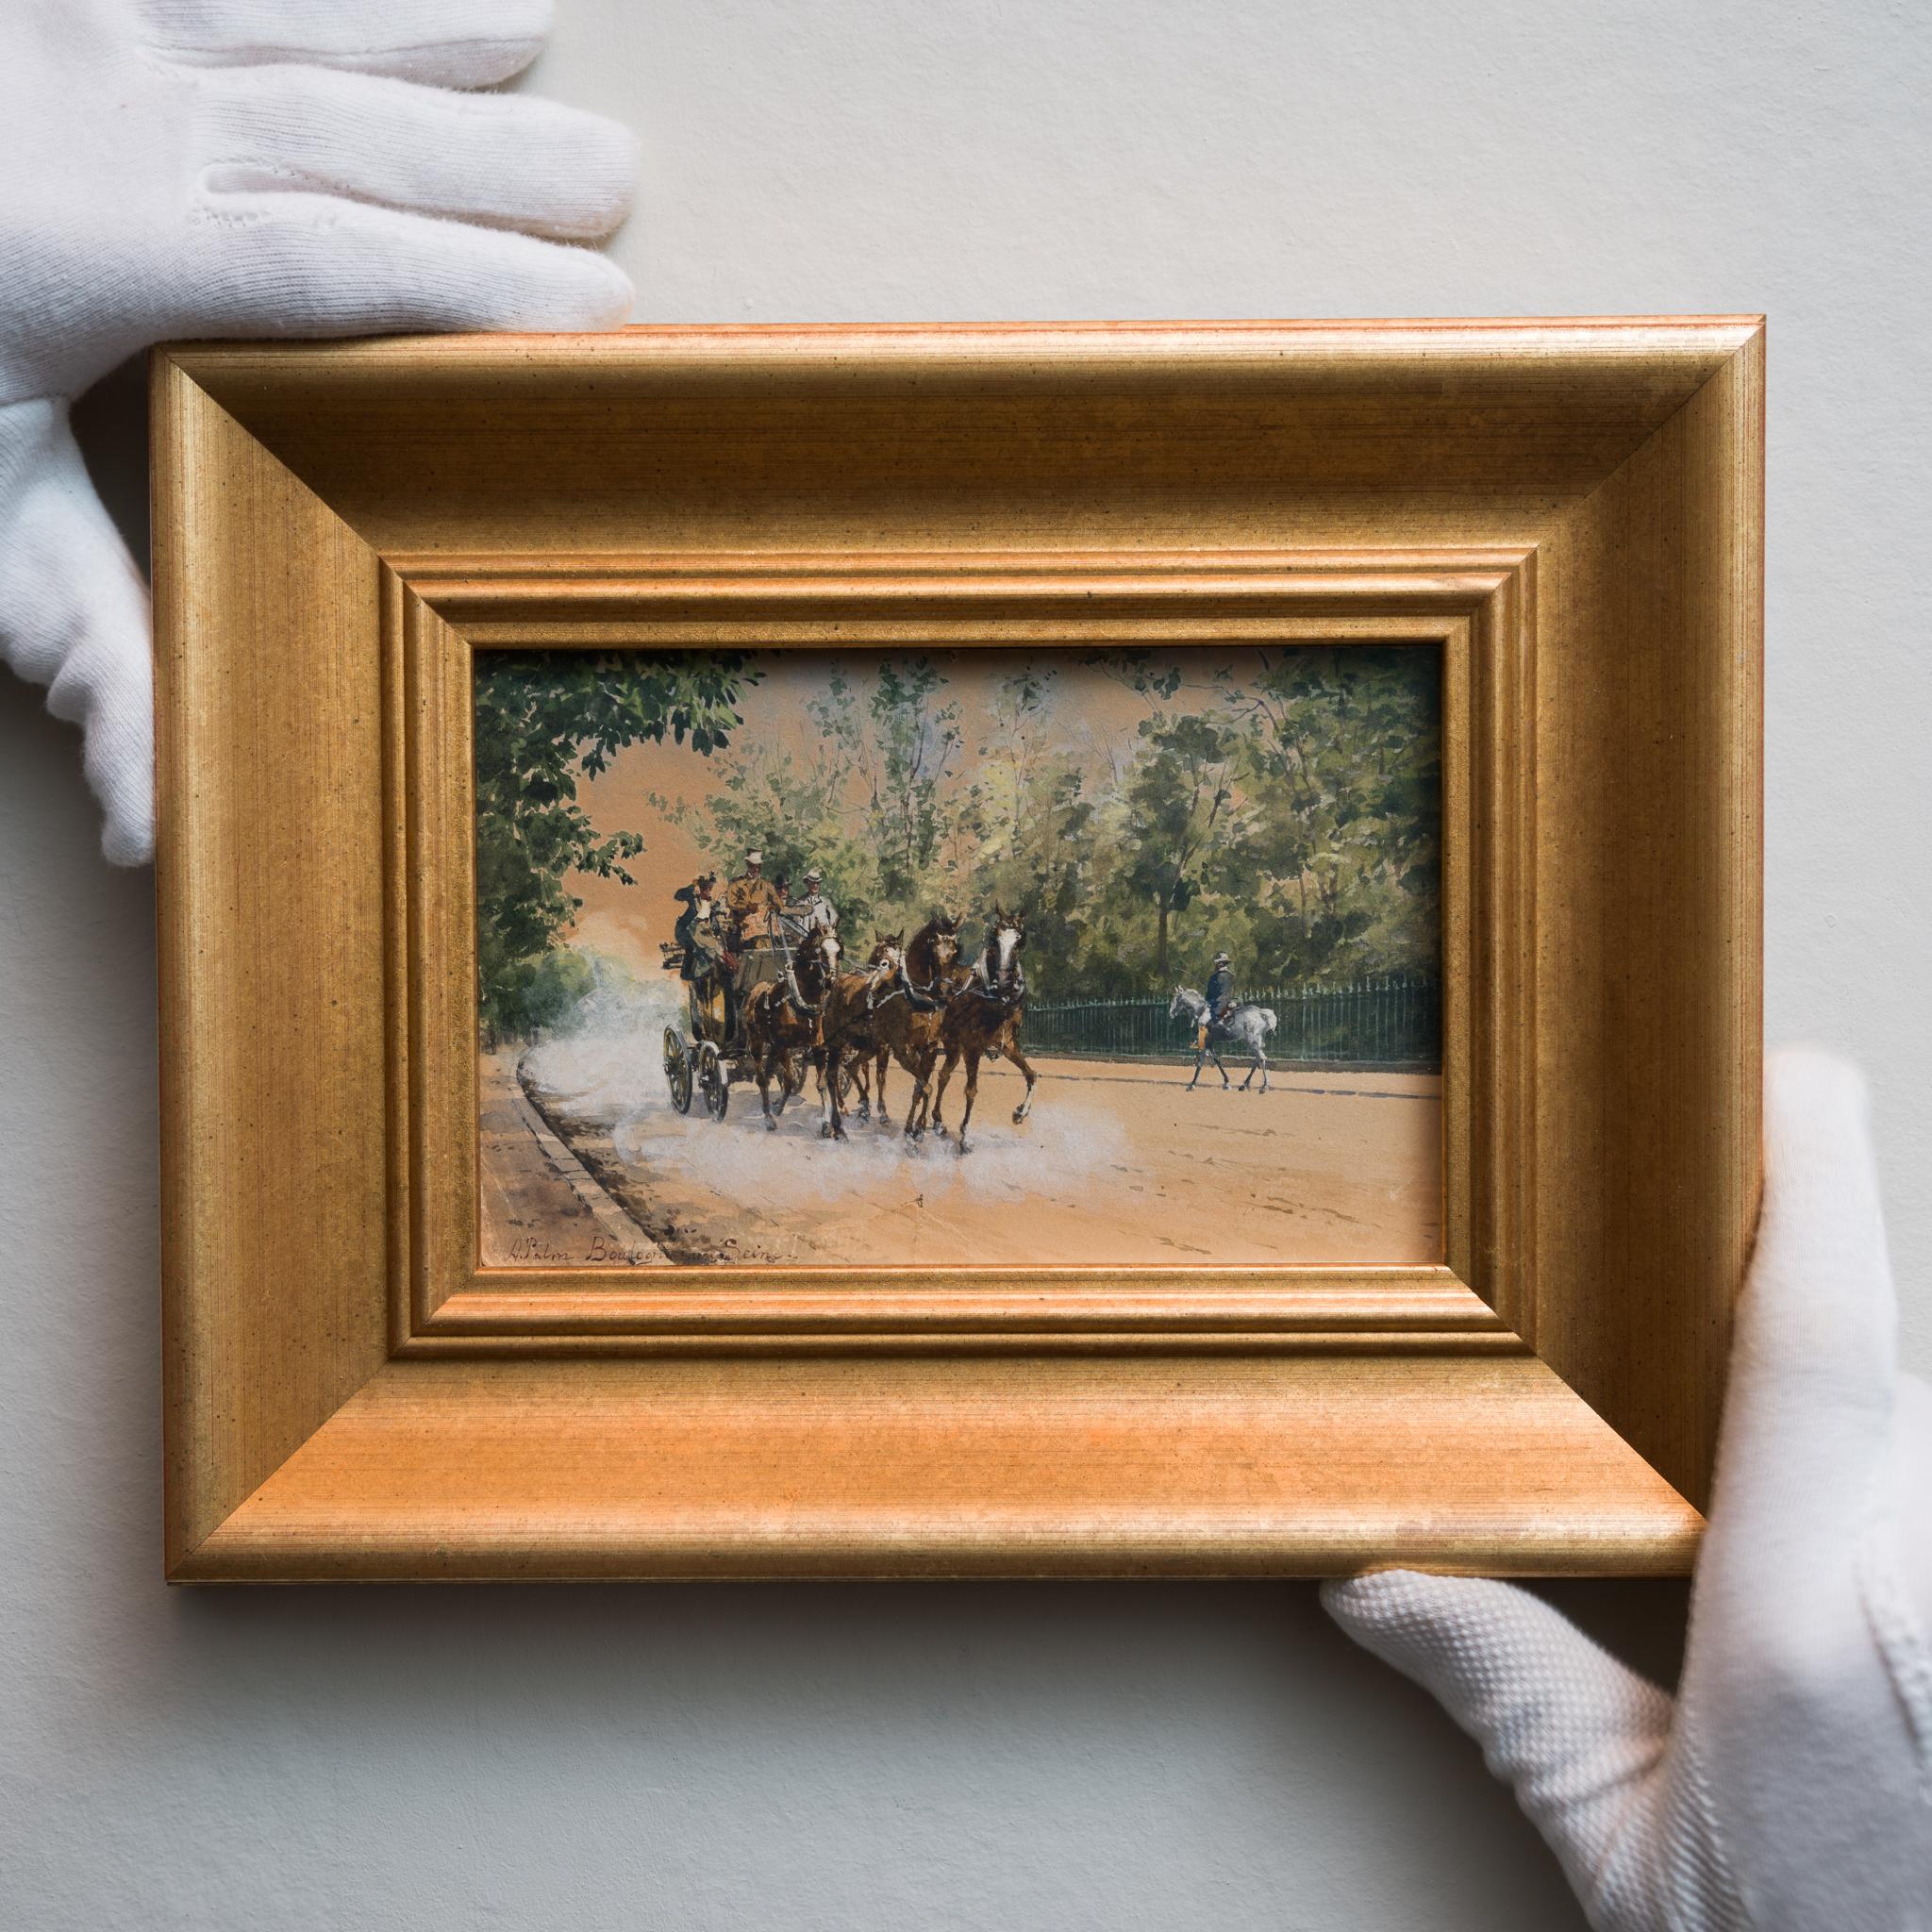 Coach and horses at full speed, Paris, Boulogne-sur-Seine - Art by Anna Palm de Rosa